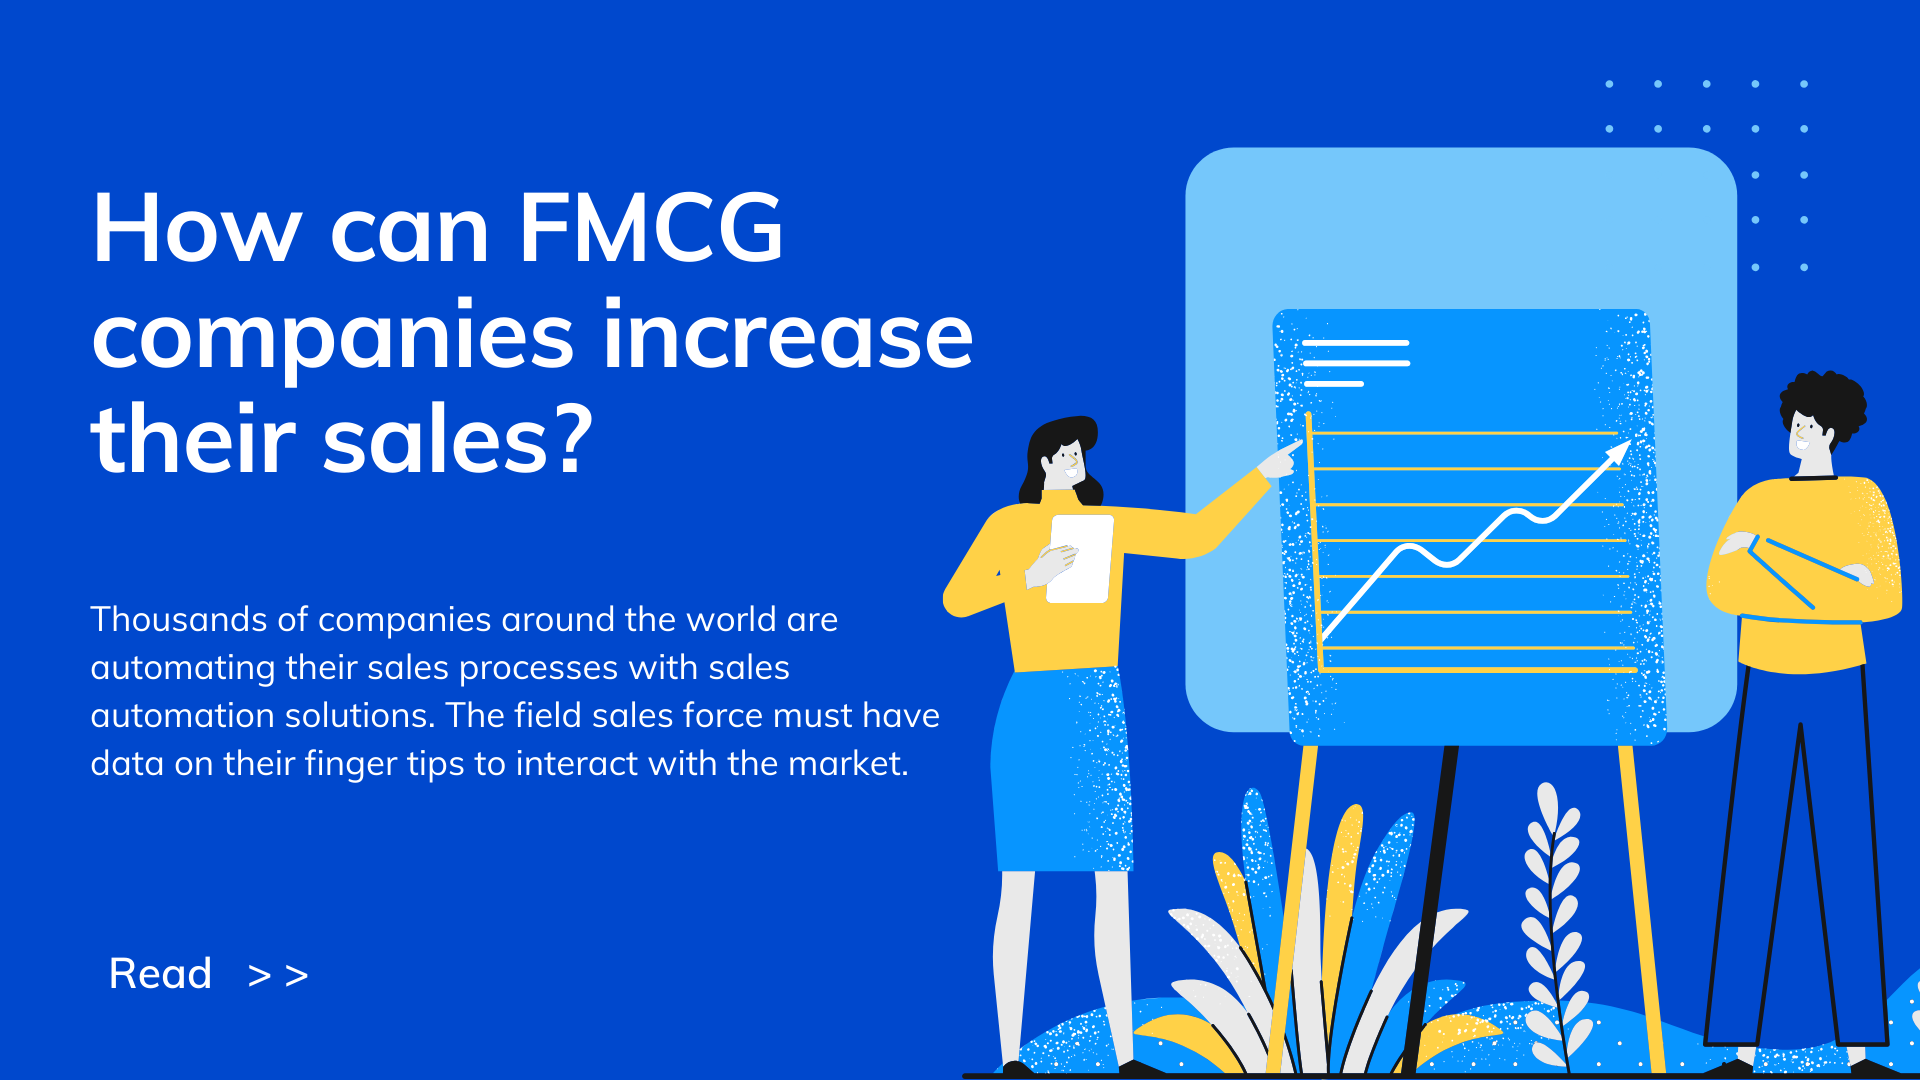 How can FMCG companies increase their sales?